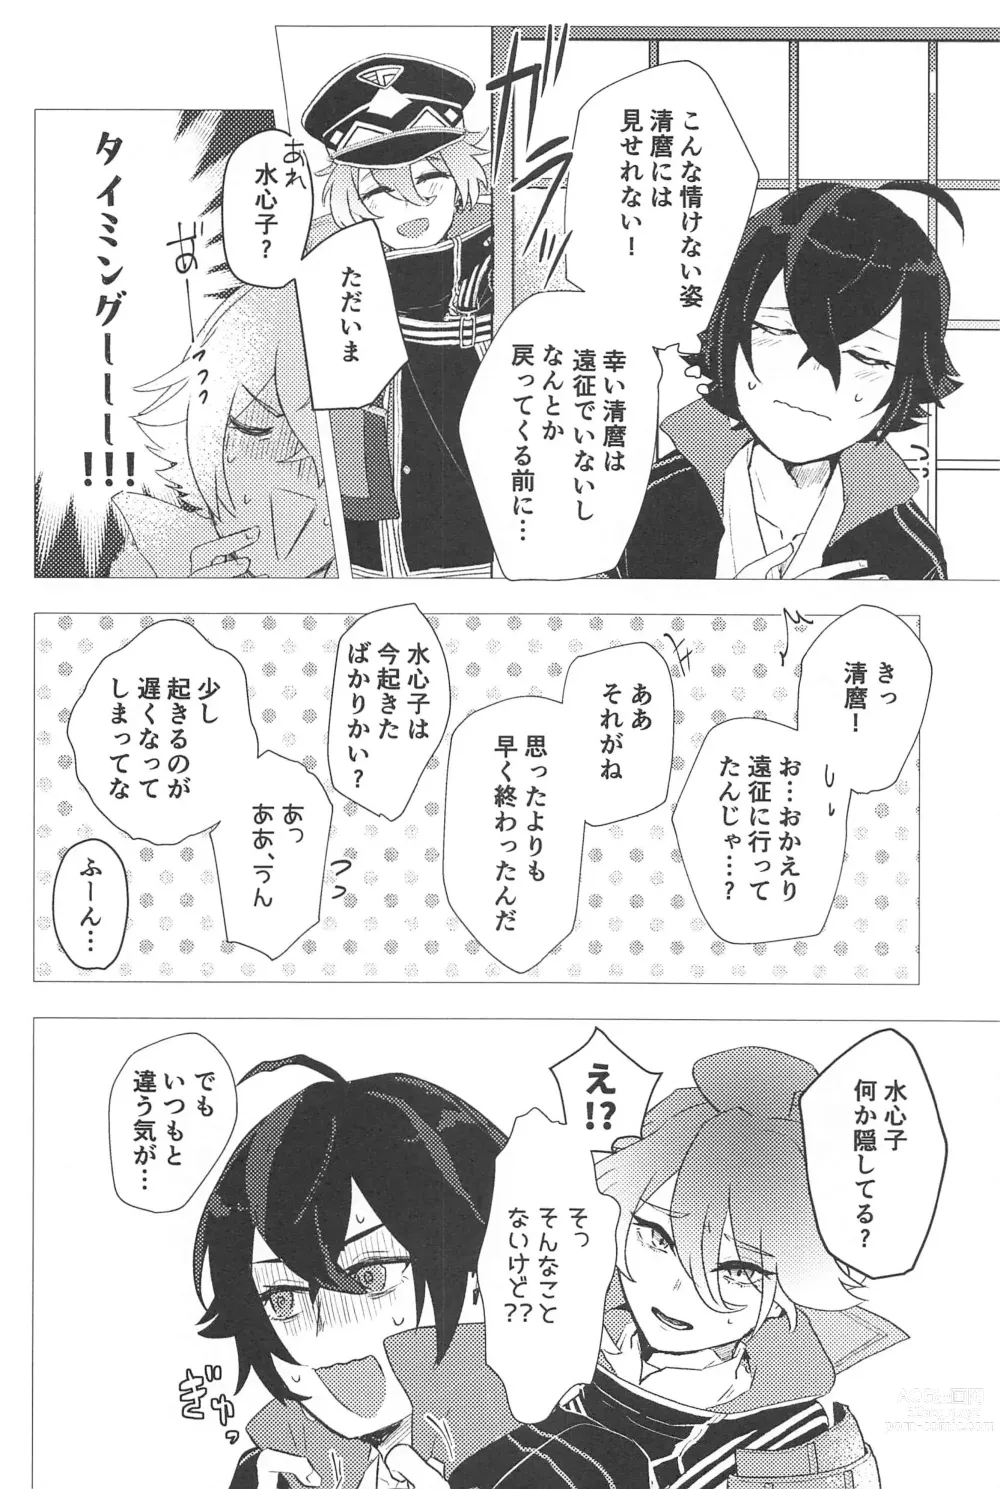 Page 13 of doujinshi Konnanotte Nai!